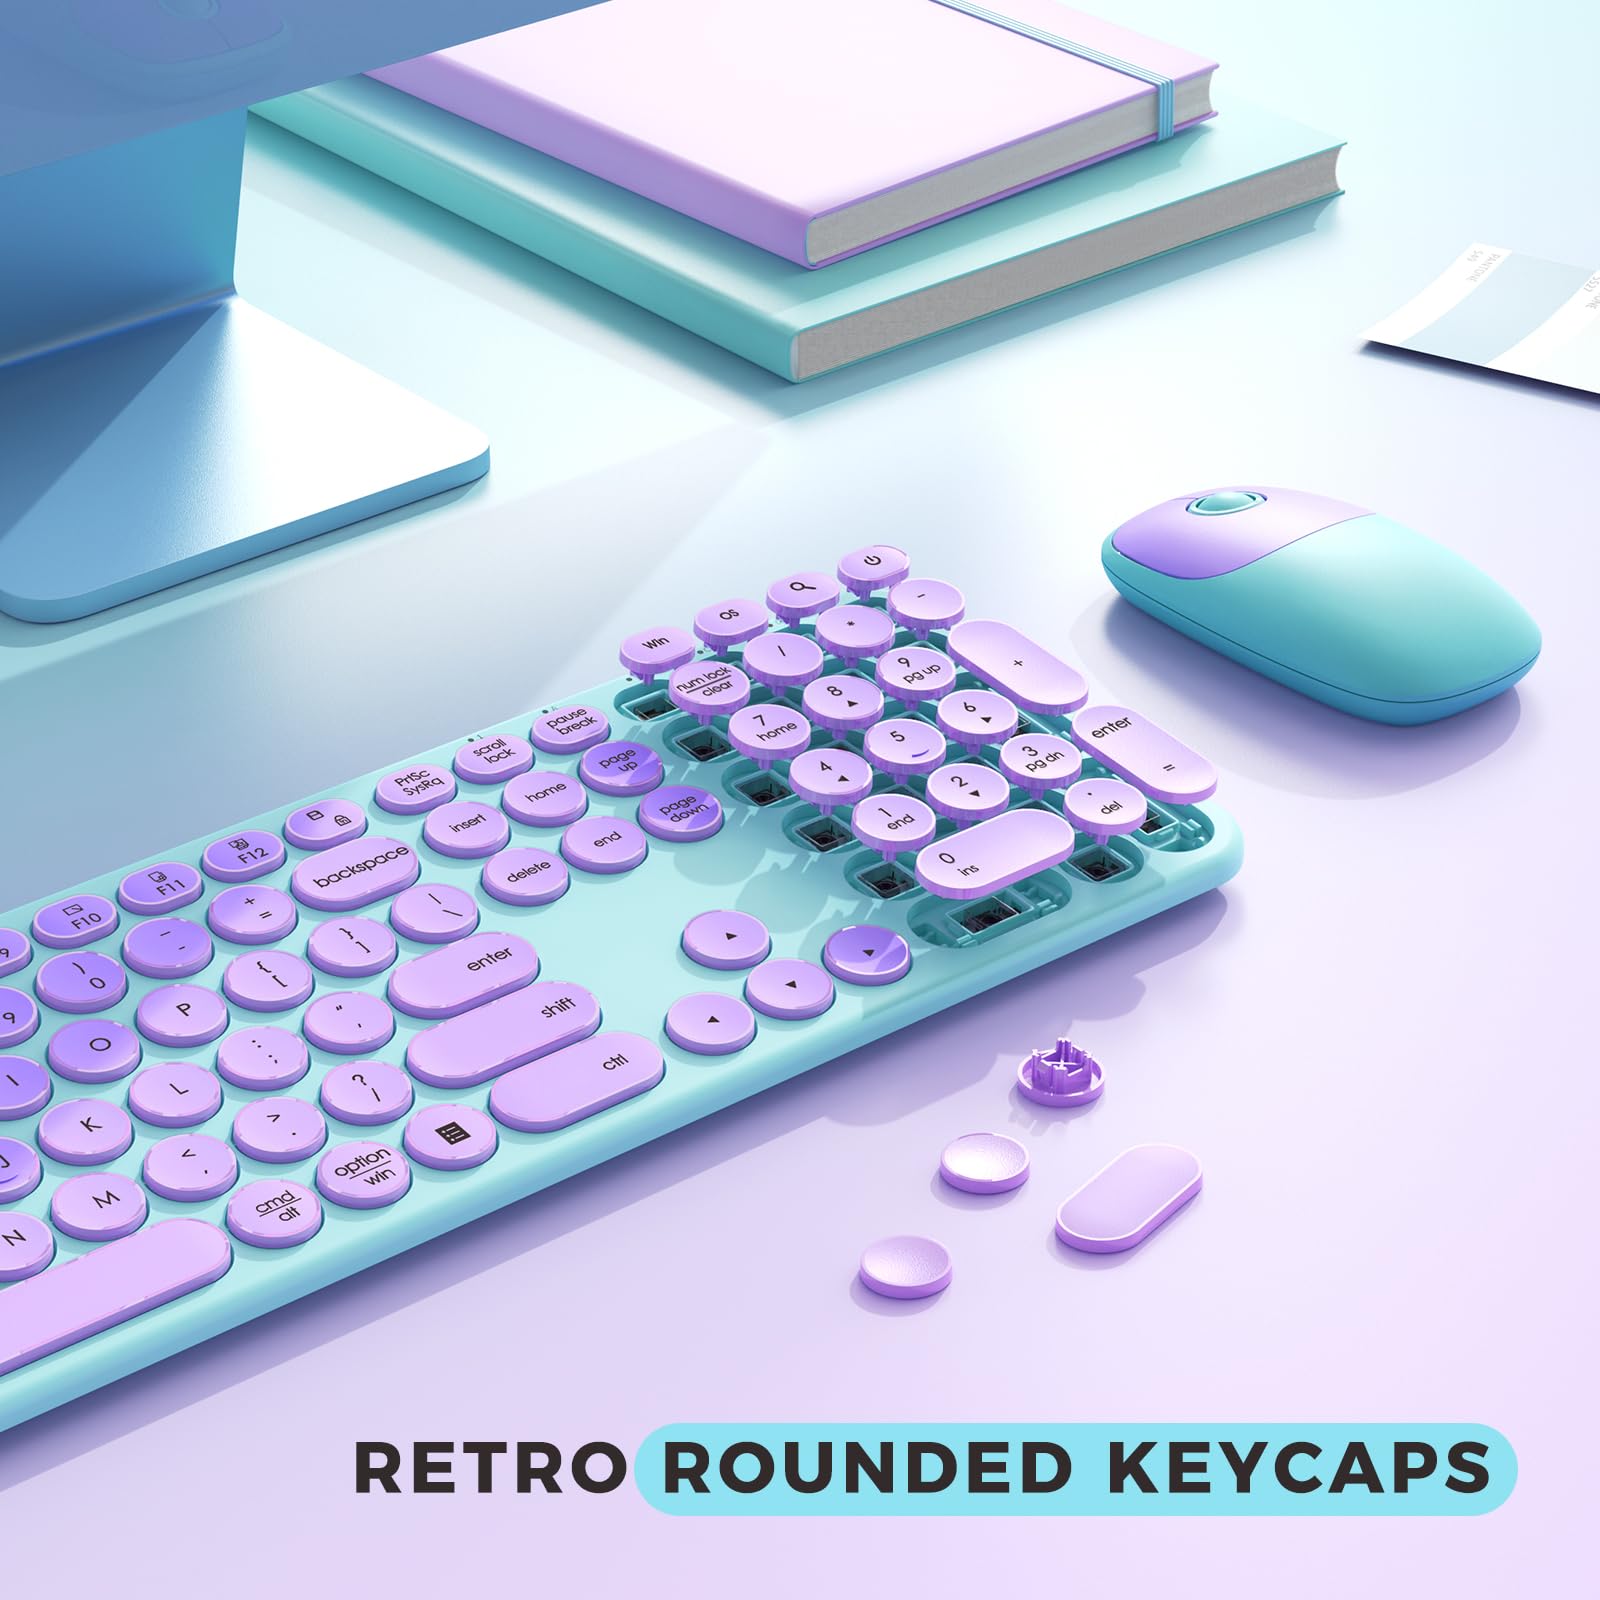 Purple Wireless Keyboard and Mouse, seenda USB/Type C Wireless Keyboard Mouse for Win & Mac, Full Size Cute Keyboard Compatible with MacBook, Windows 7/8/10, Laptop (Purple Green)